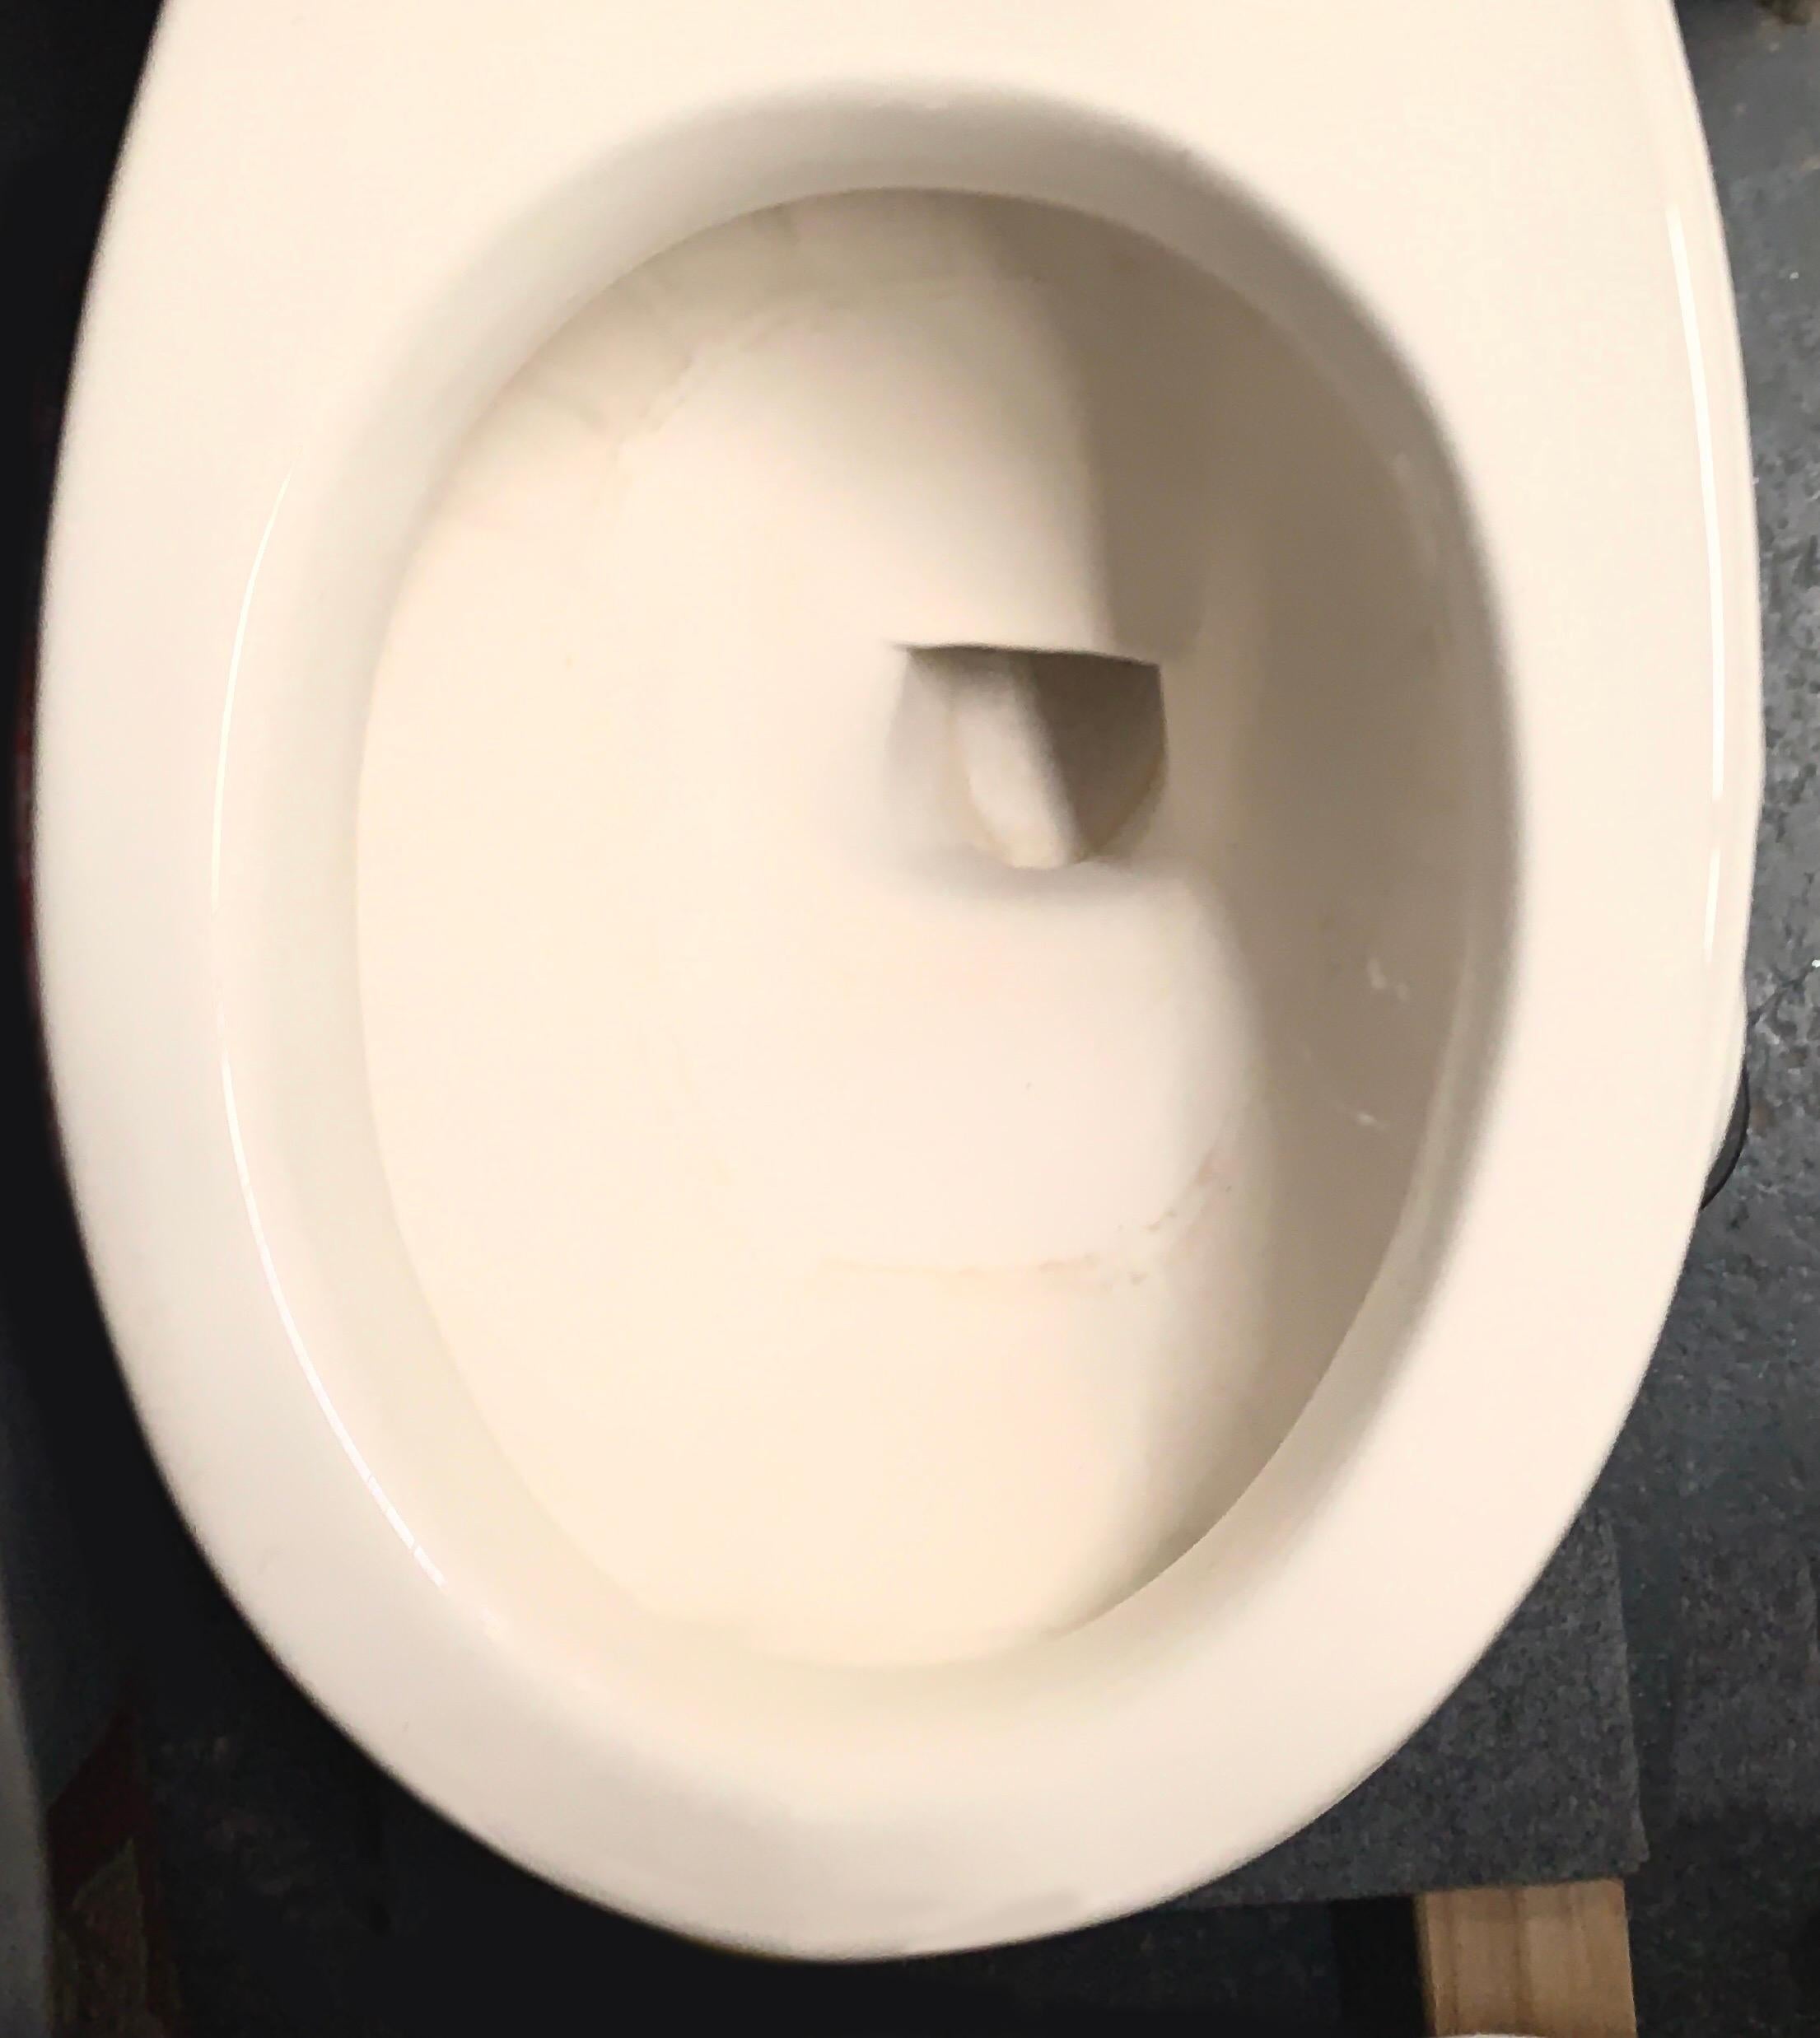 Vintage Laufen Nautilus regal lion porcelain throne toilet water closet, cistern
Nautilus II toilet and cistern
Includes porcelain lion toilet, ceramic cistern with Lid
Pom door towel rod